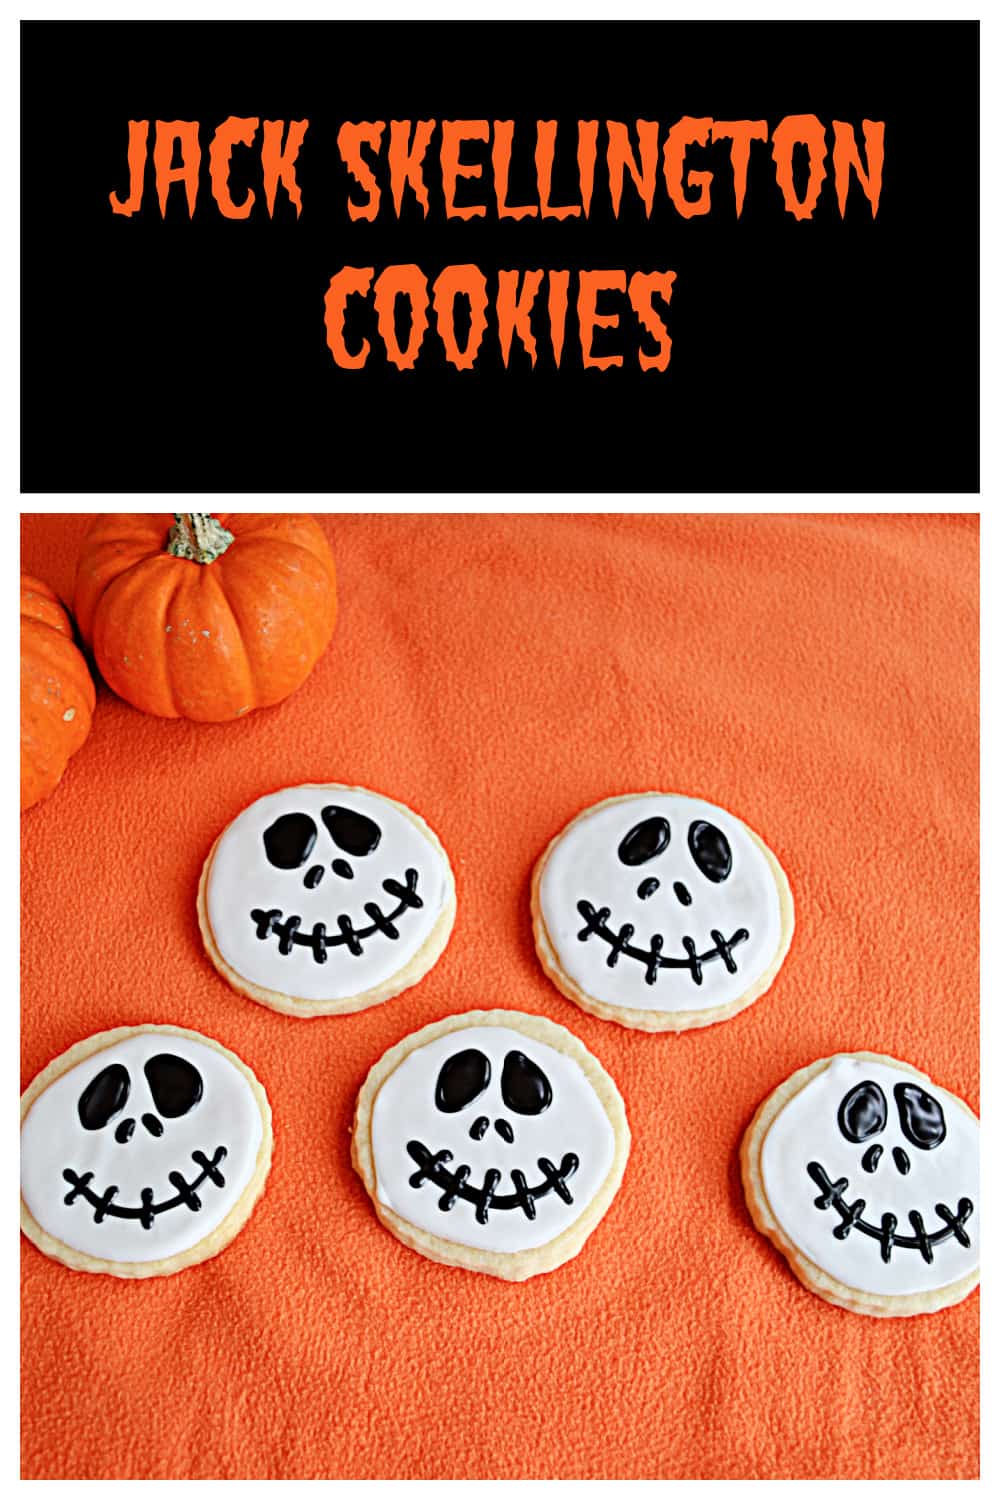 Pin Image:   Text title, Jack Skellington Cookies and pumpkins. 